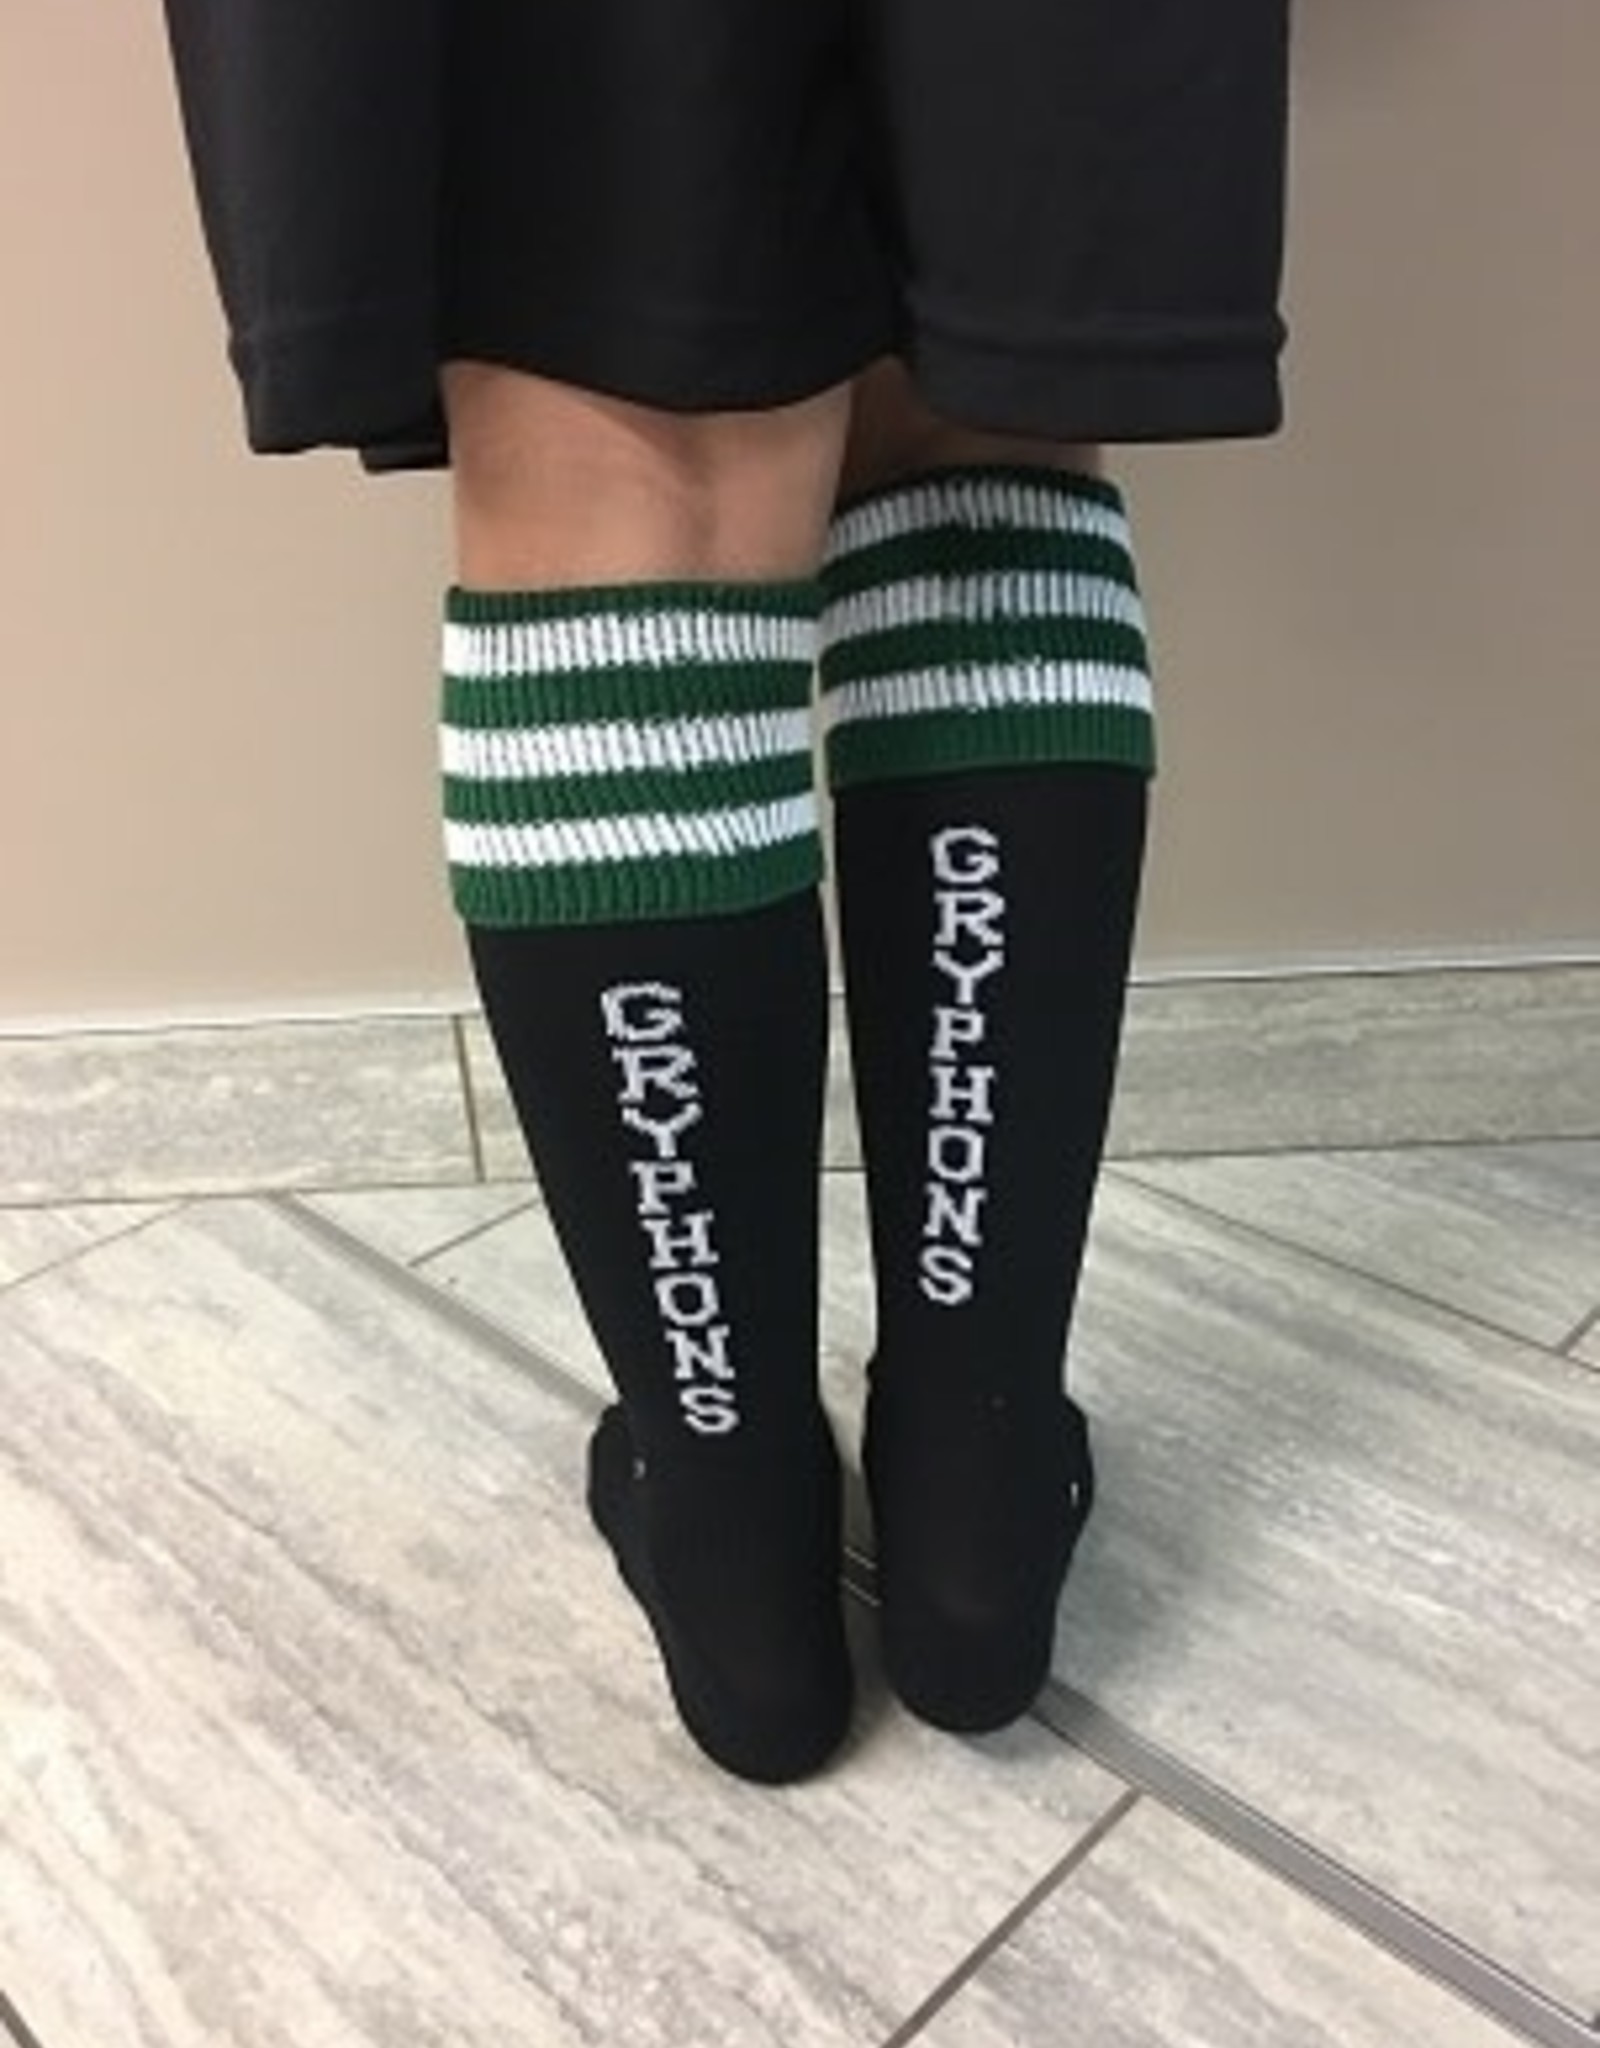 Socks Soccer Adult BVG